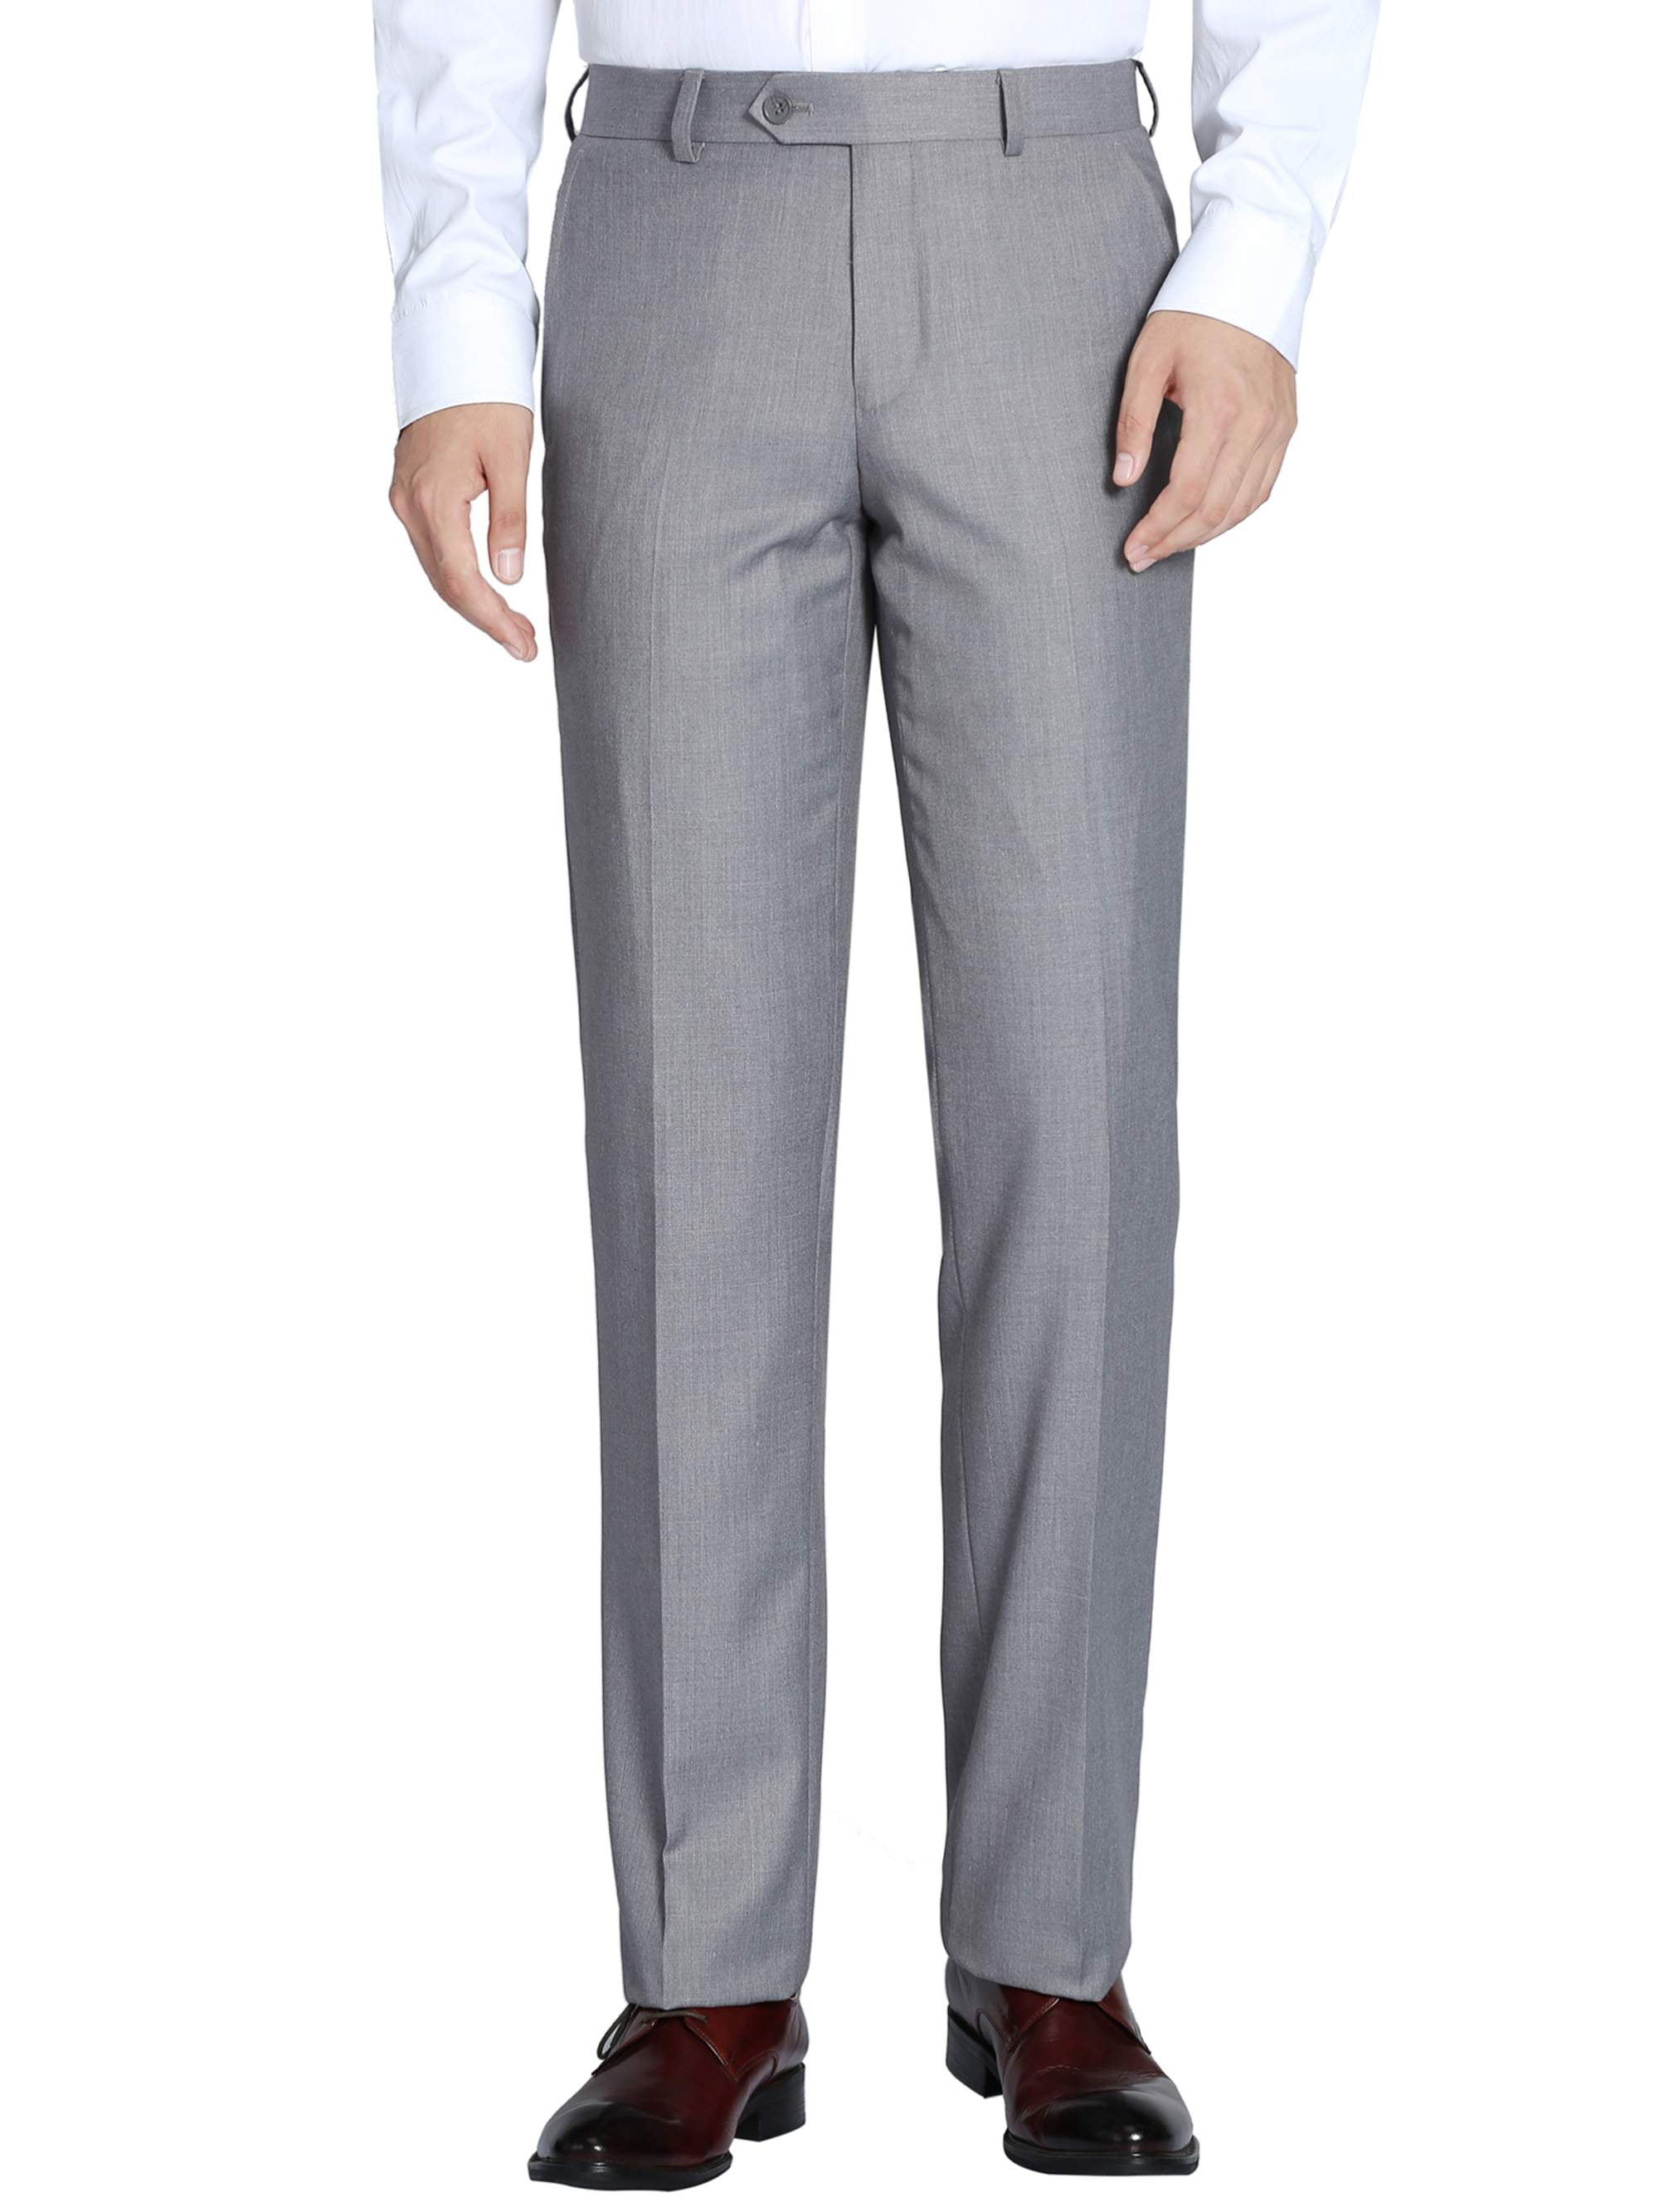 Verno - Men's Slim Fit Suit Separate Pants Flat Front Performance Dress ...